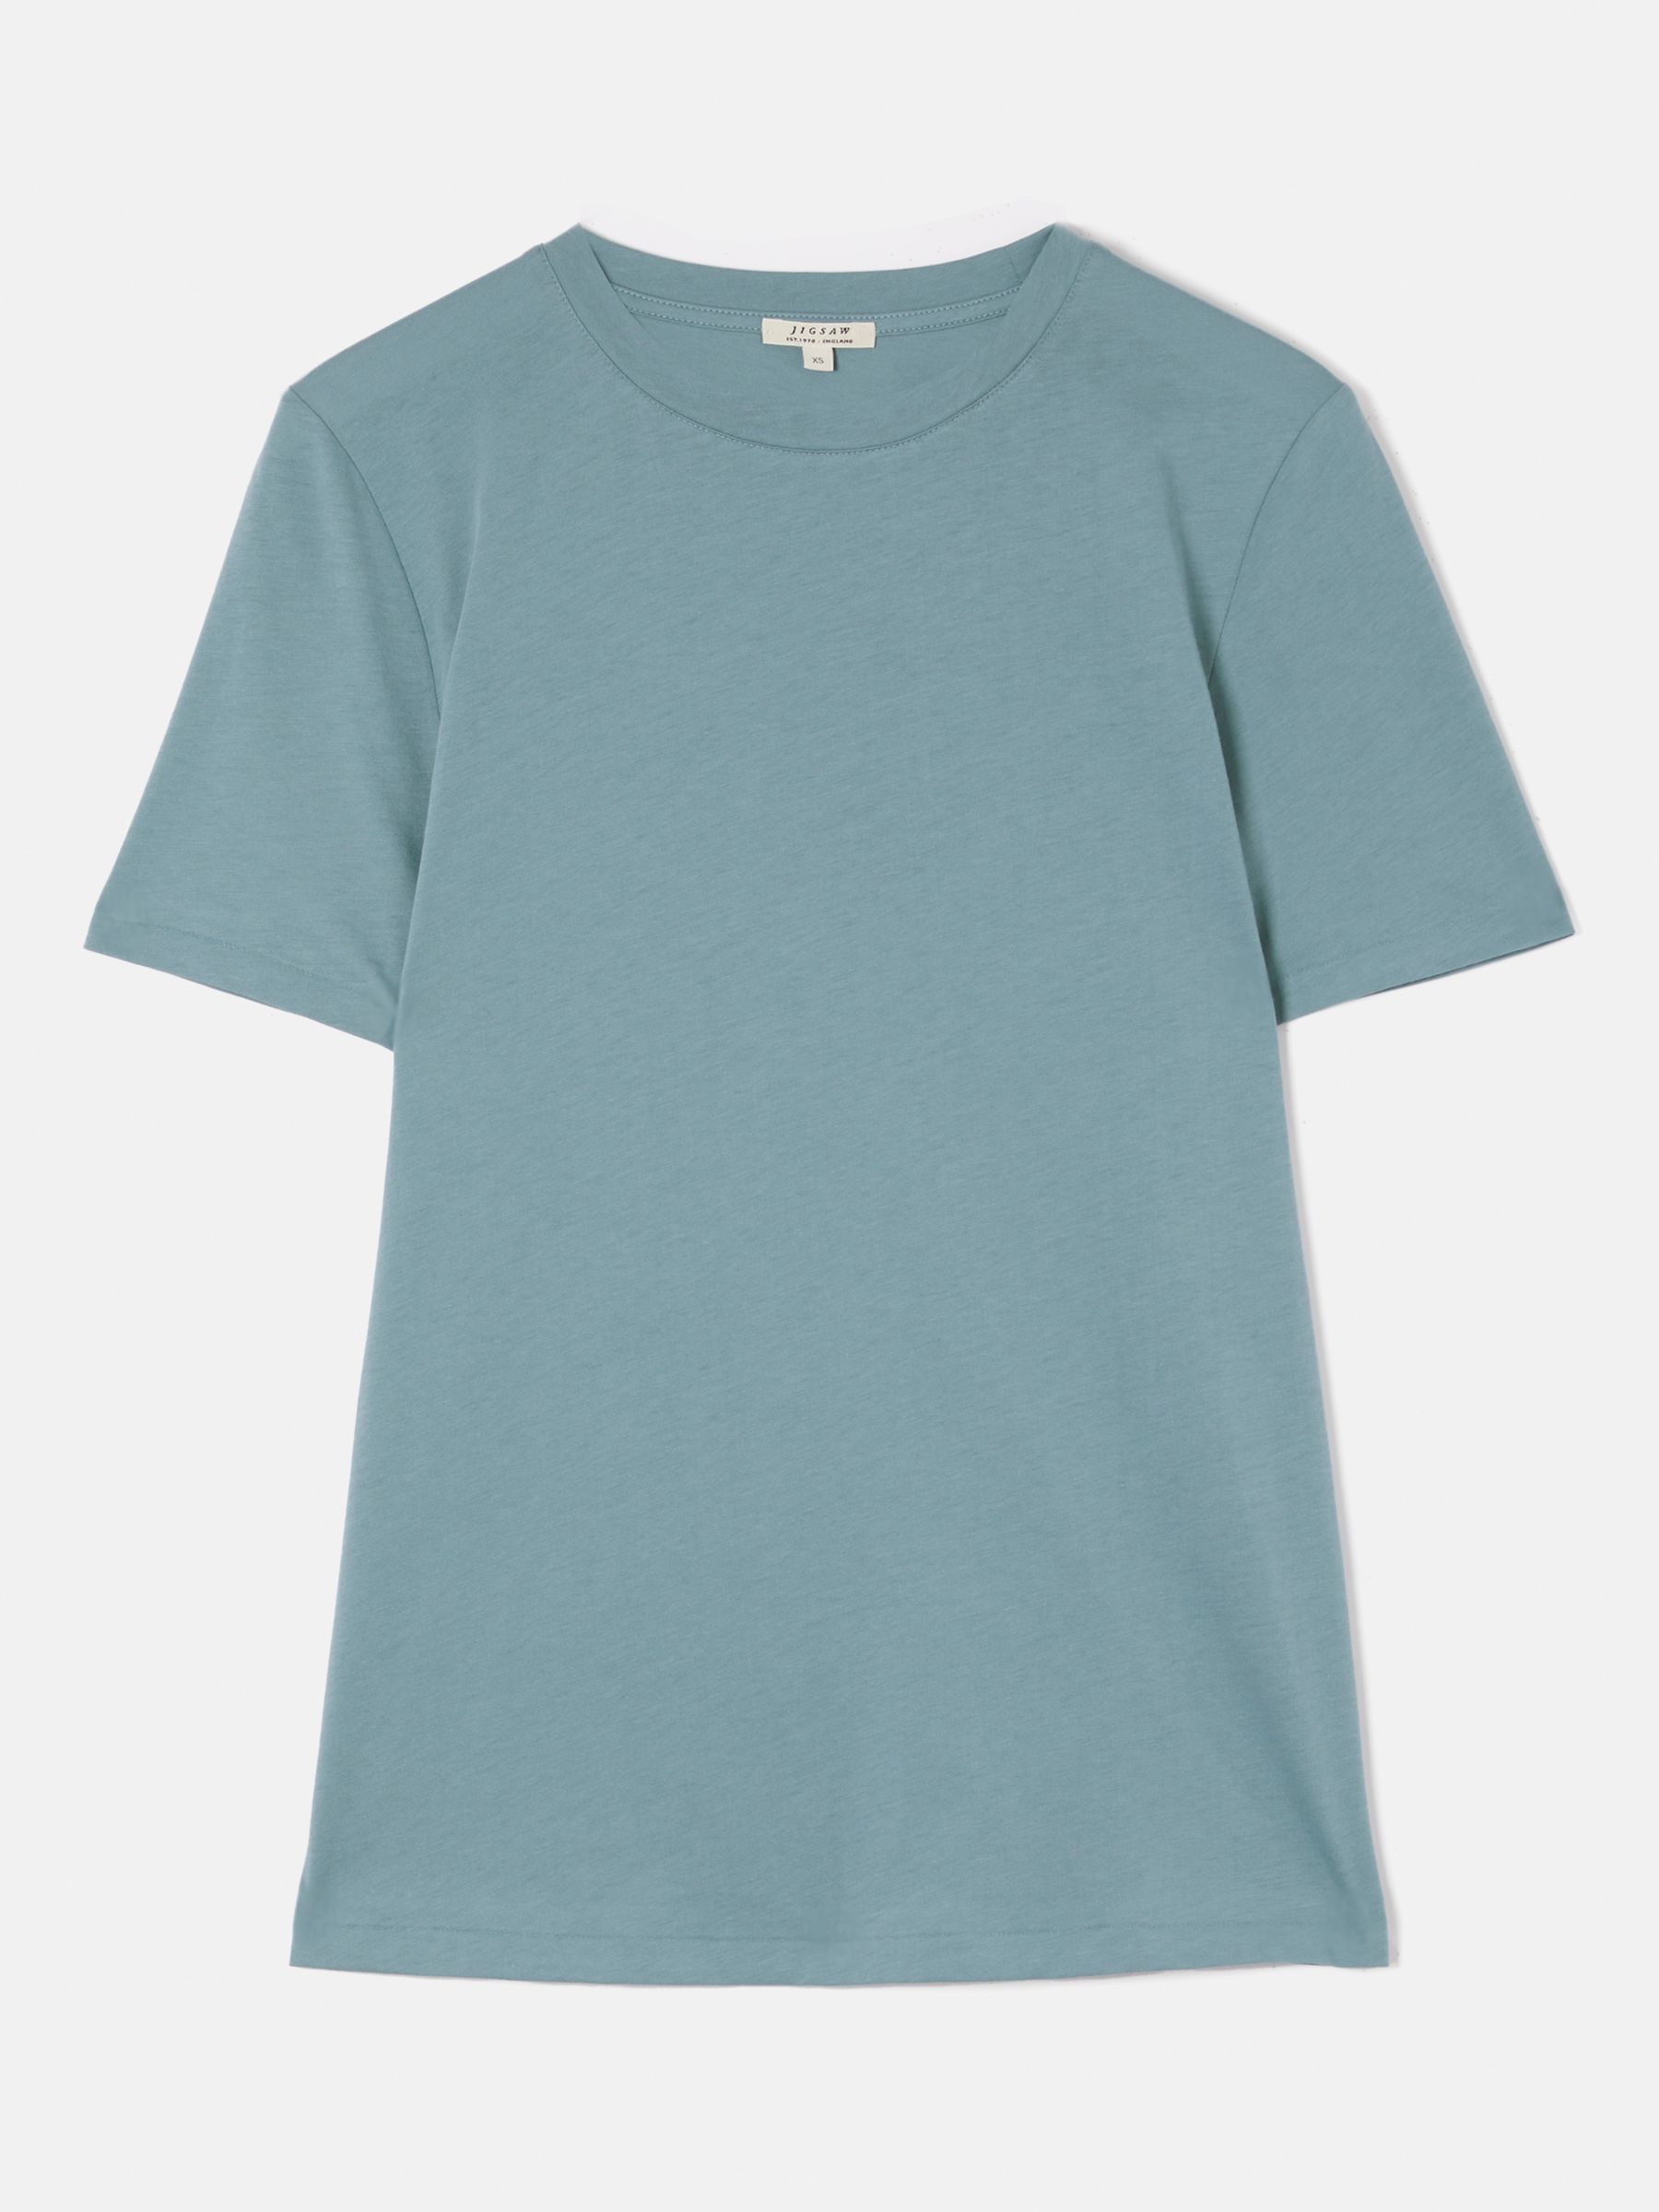 Jigsaw Supima Cotton Crew Neck T-Shirt, Blue, XS